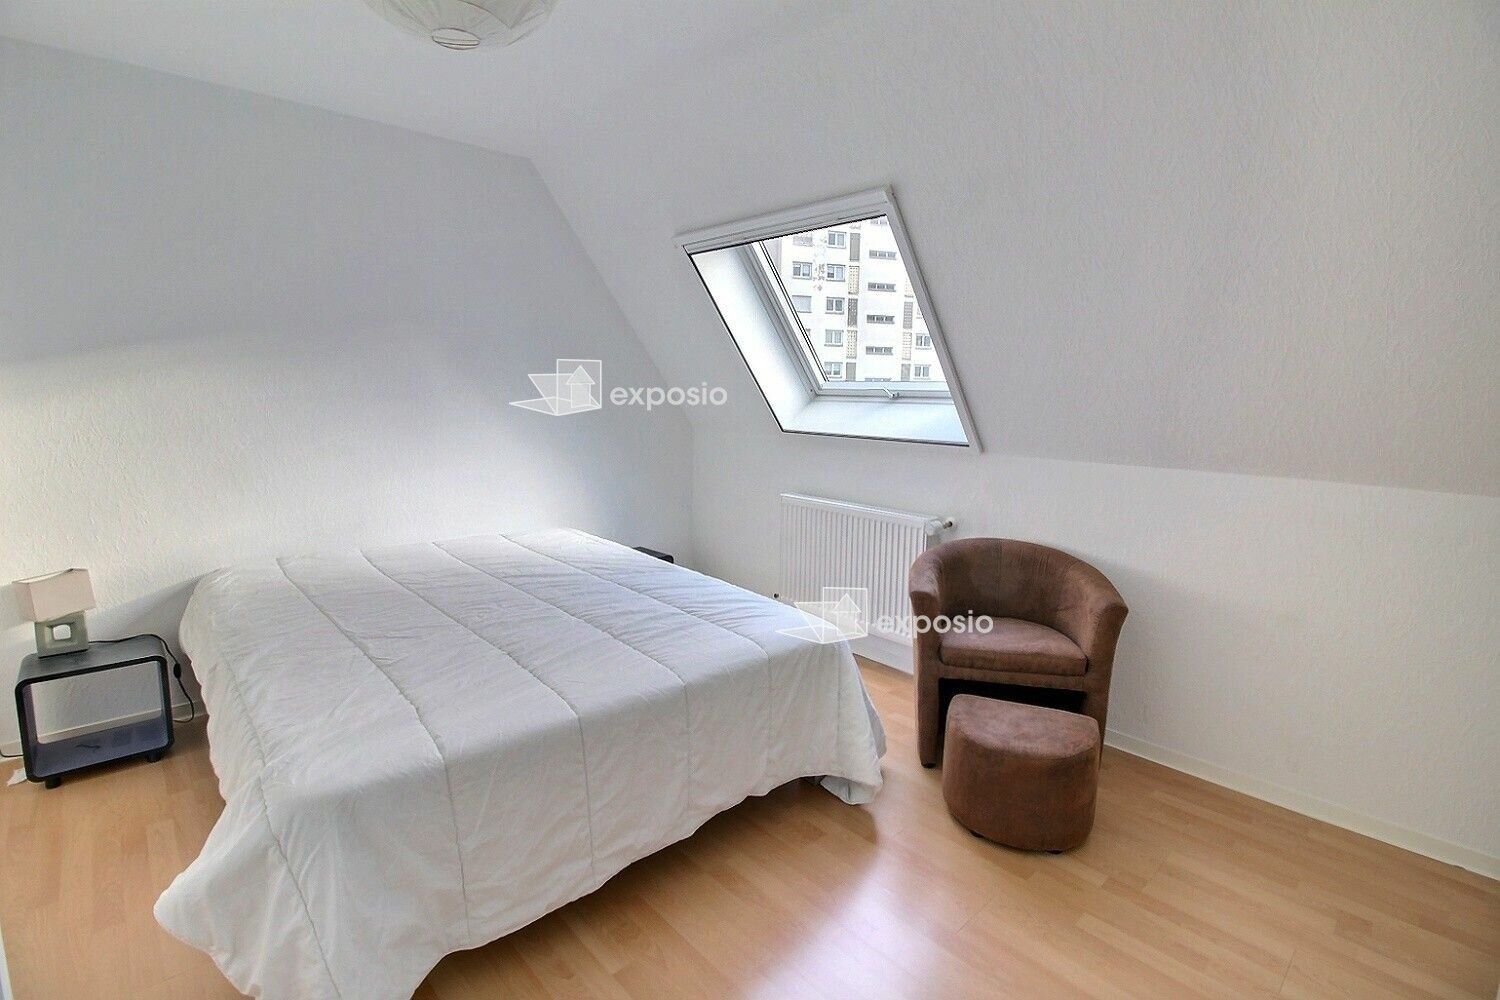 Appartement à vendre 3 72.56m2 à Strasbourg vignette-5